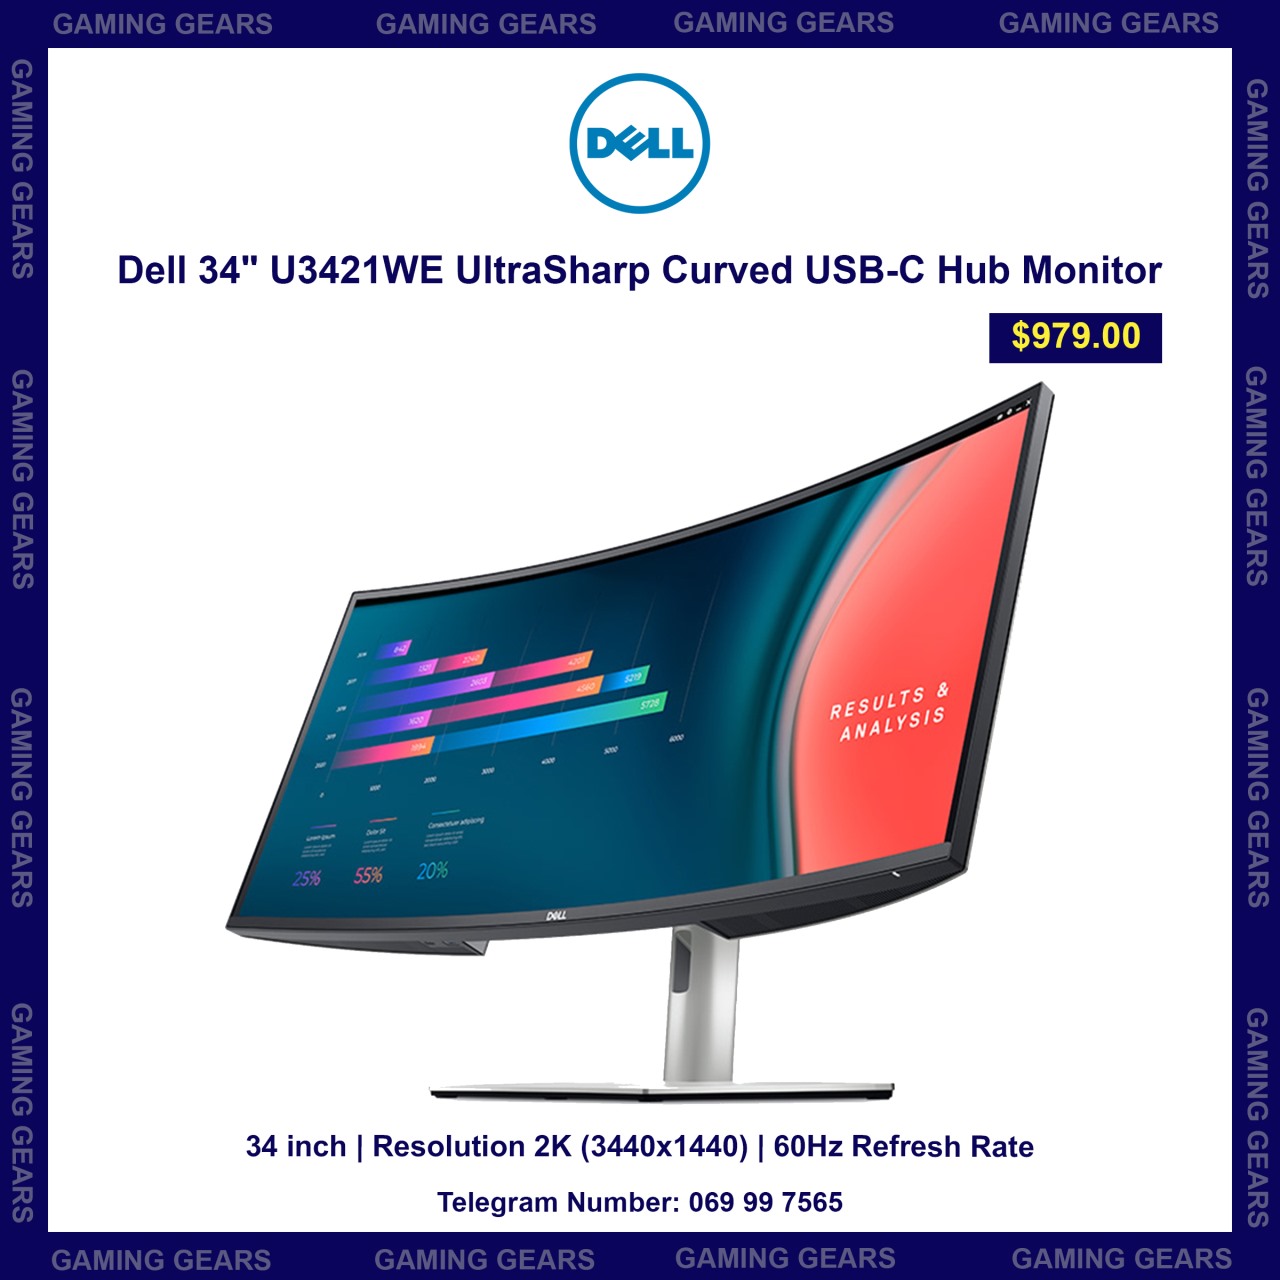 Dell 34" U3421WE UltraSharp Curved USB-C Hub Monitor